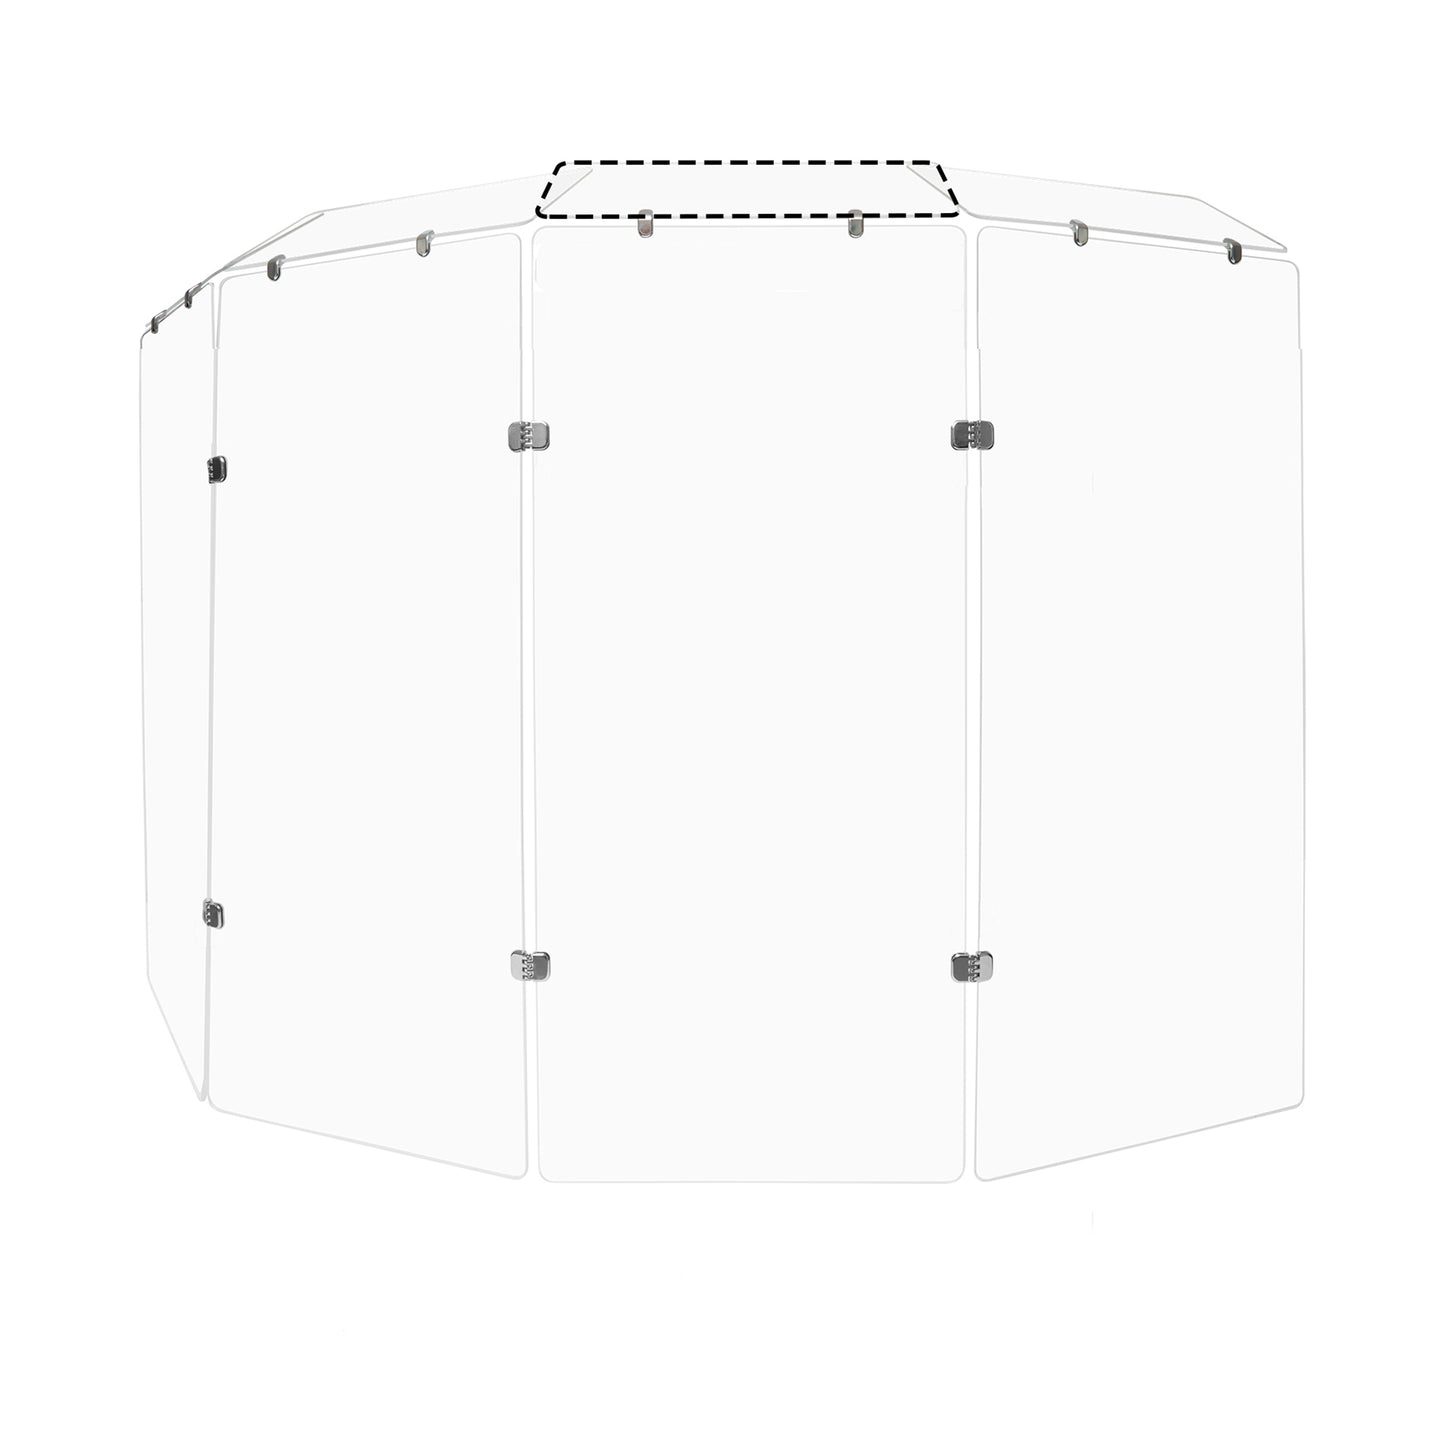 Deflector Shield w/ 2 Connectors